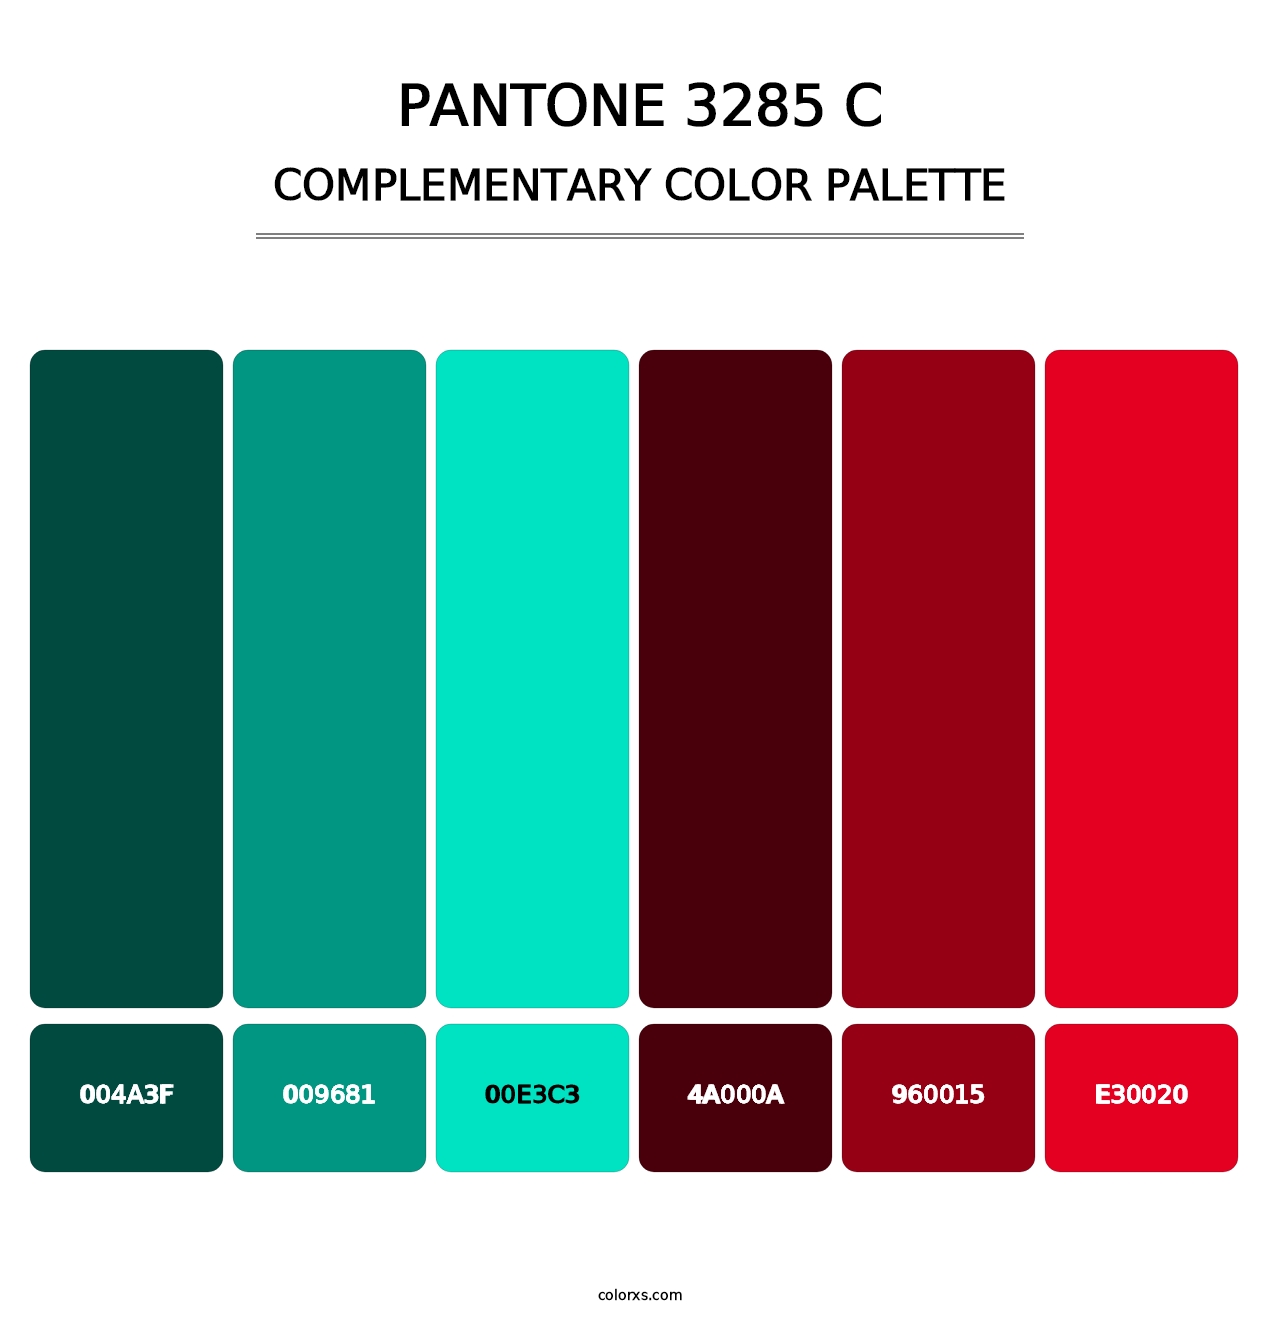 PANTONE 3285 C - Complementary Color Palette